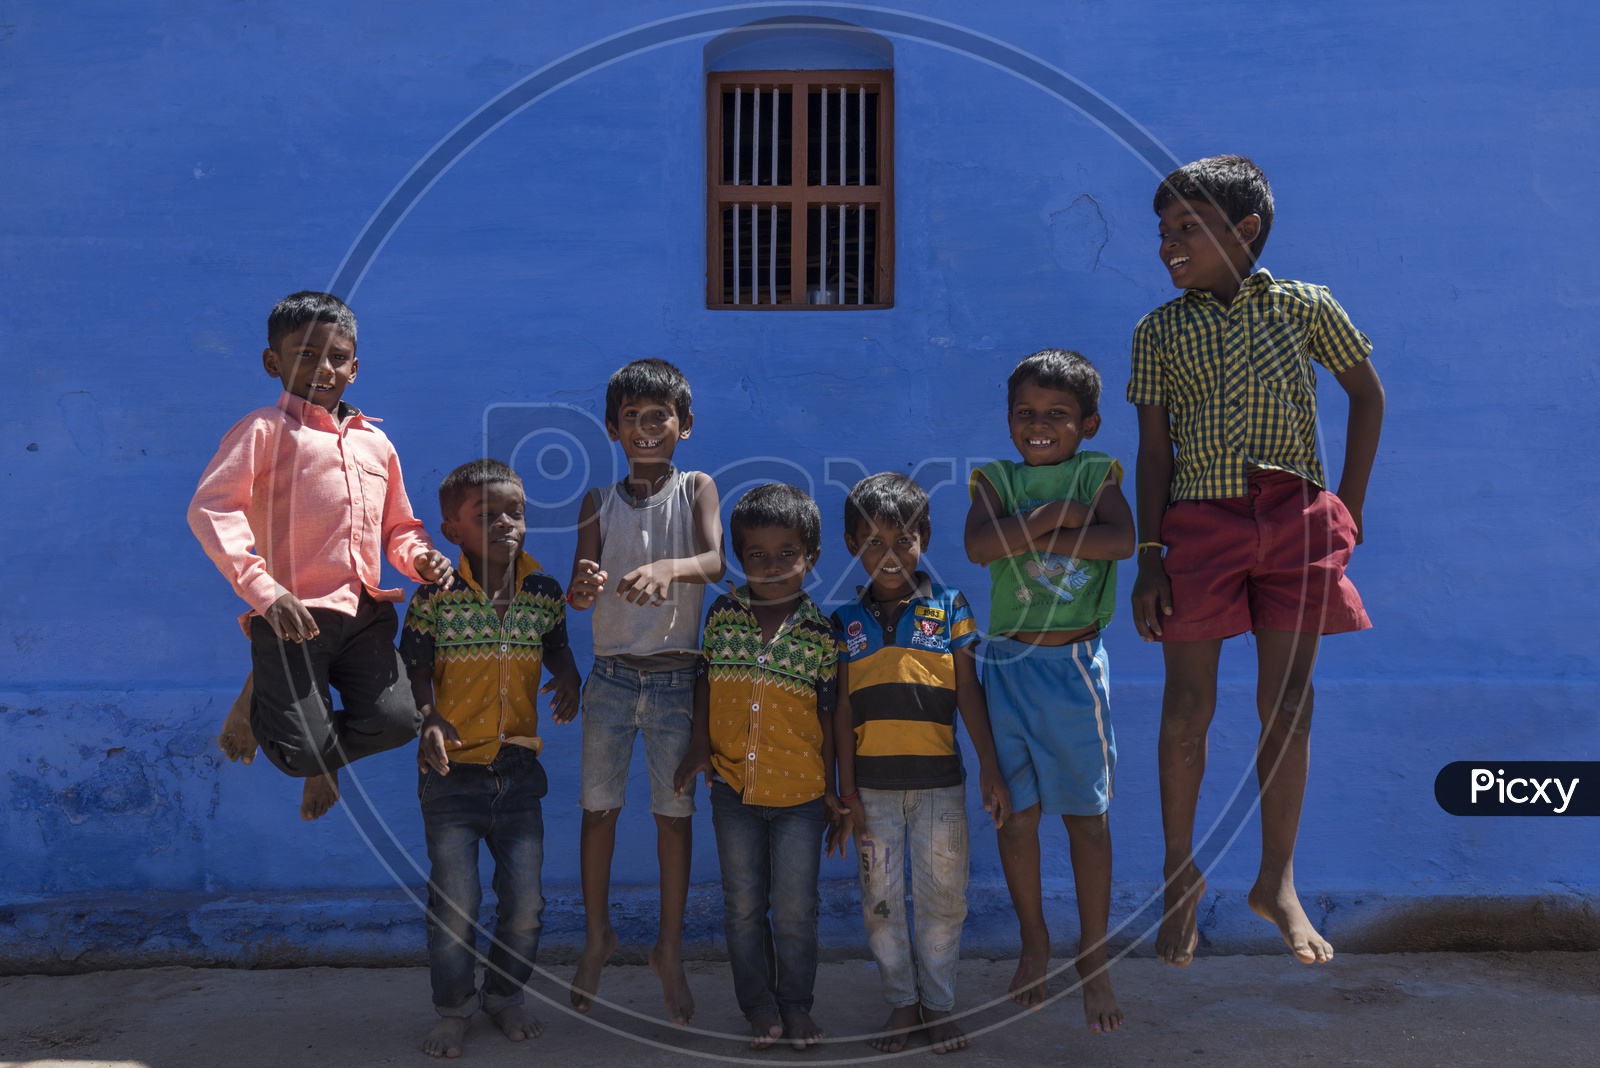 School Children With Joyful expressions in tamil nadu